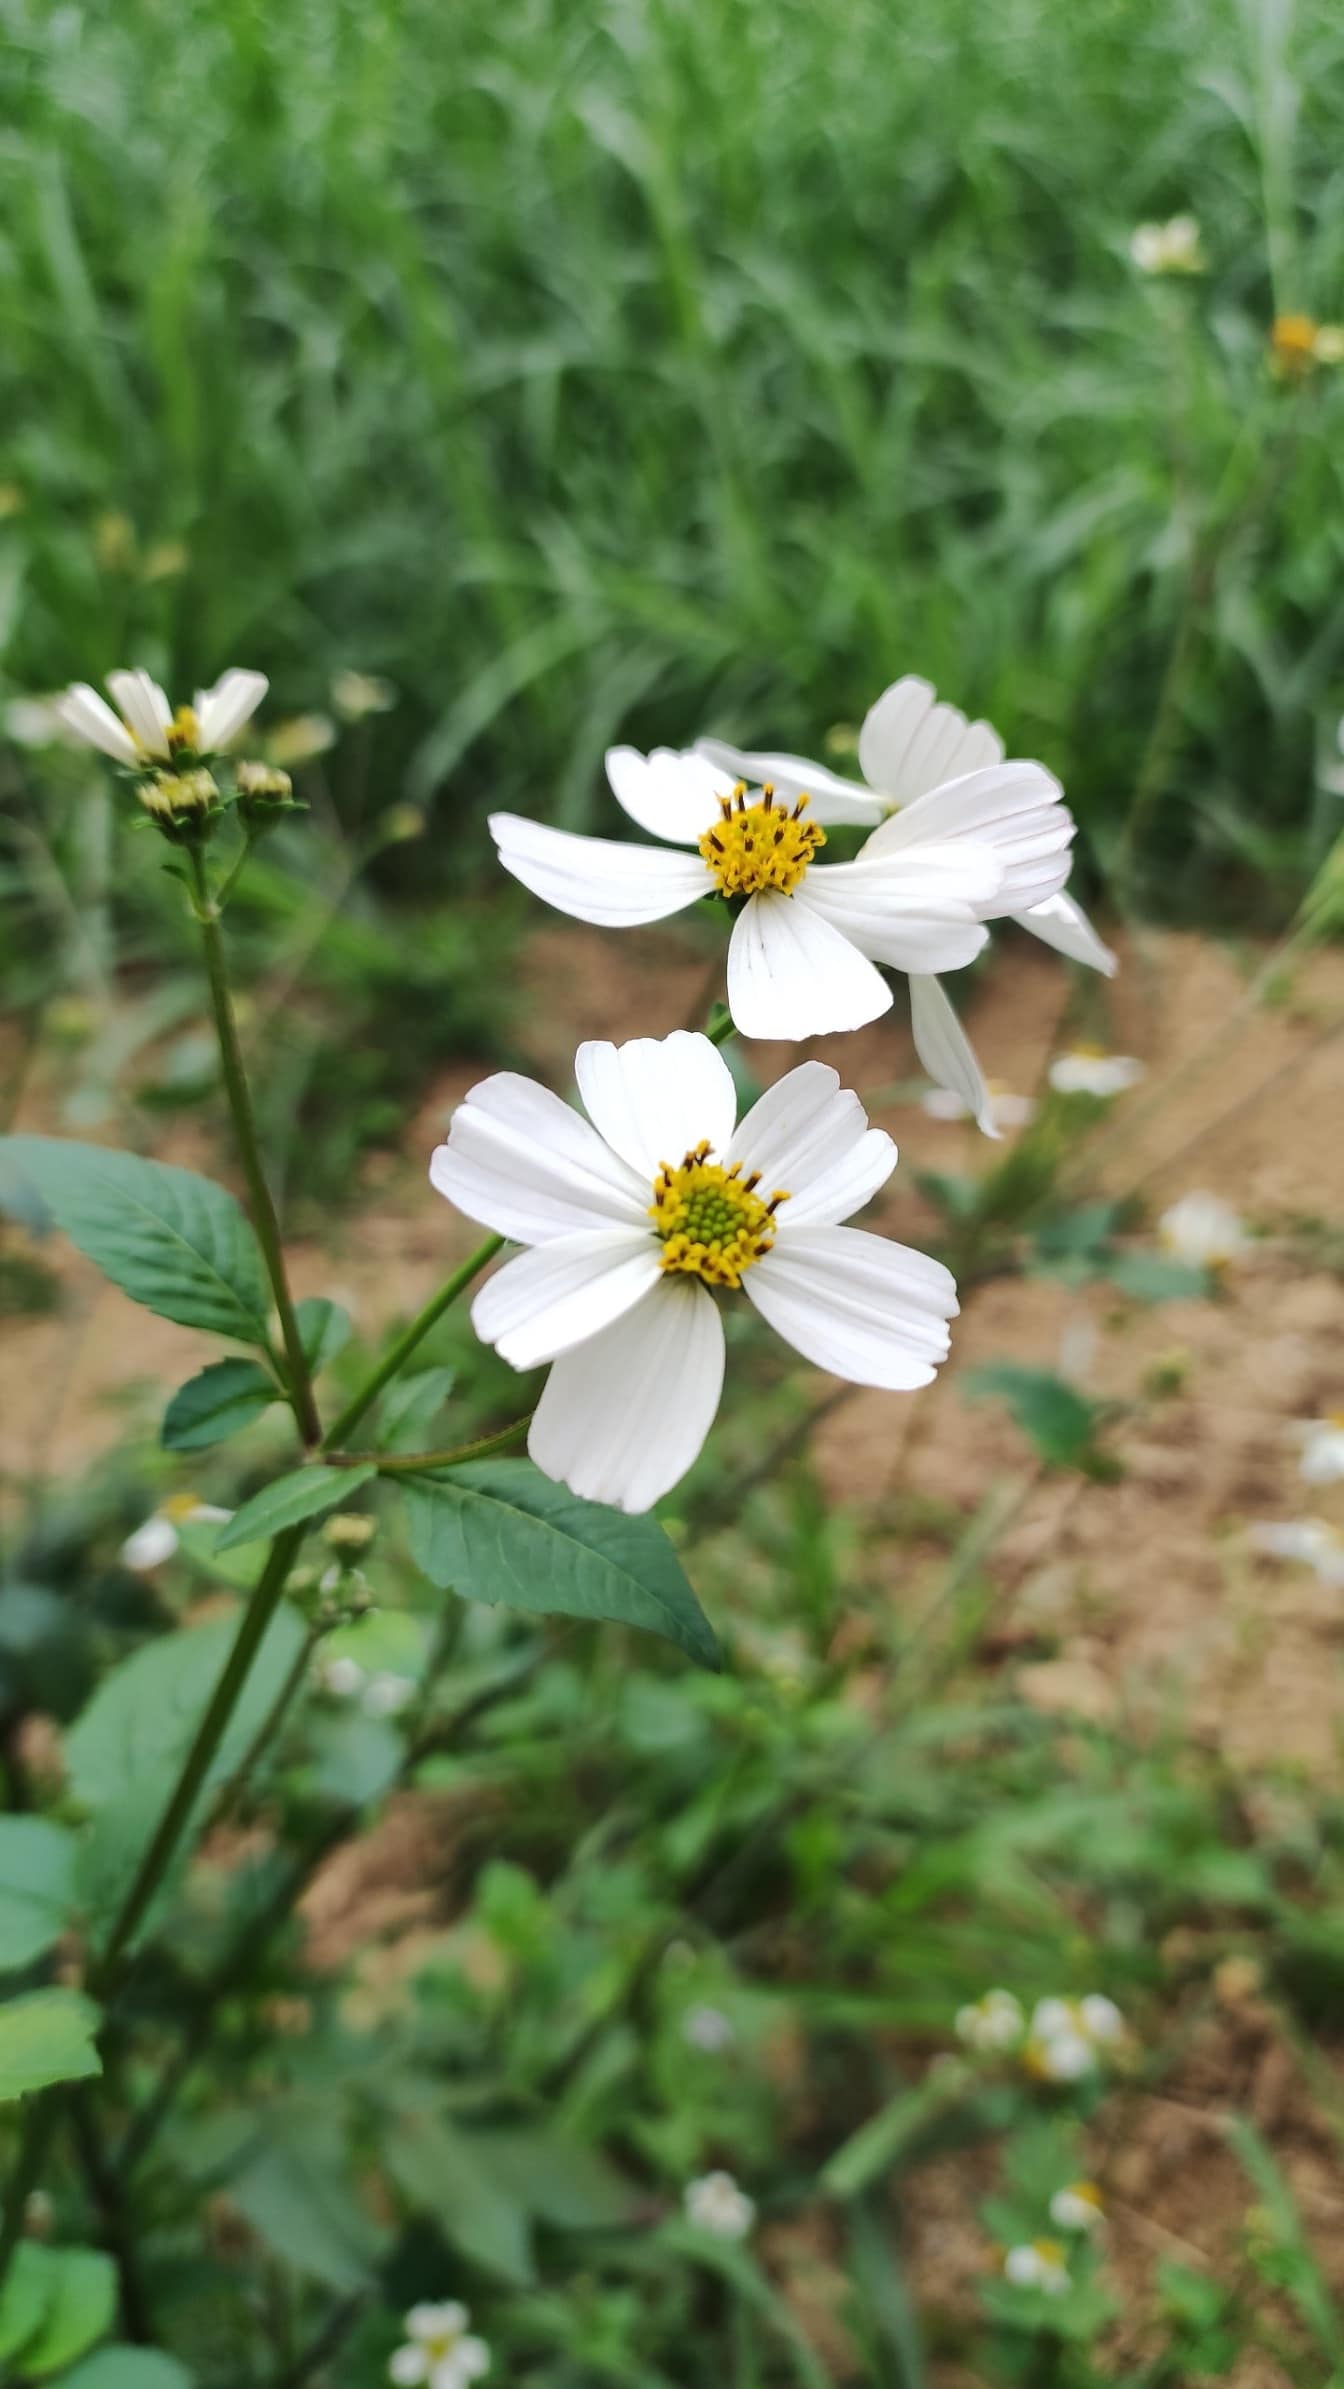 Fleur blanche (Bidens alba) fleur sauvage dans une prairie herbeuse au printemps